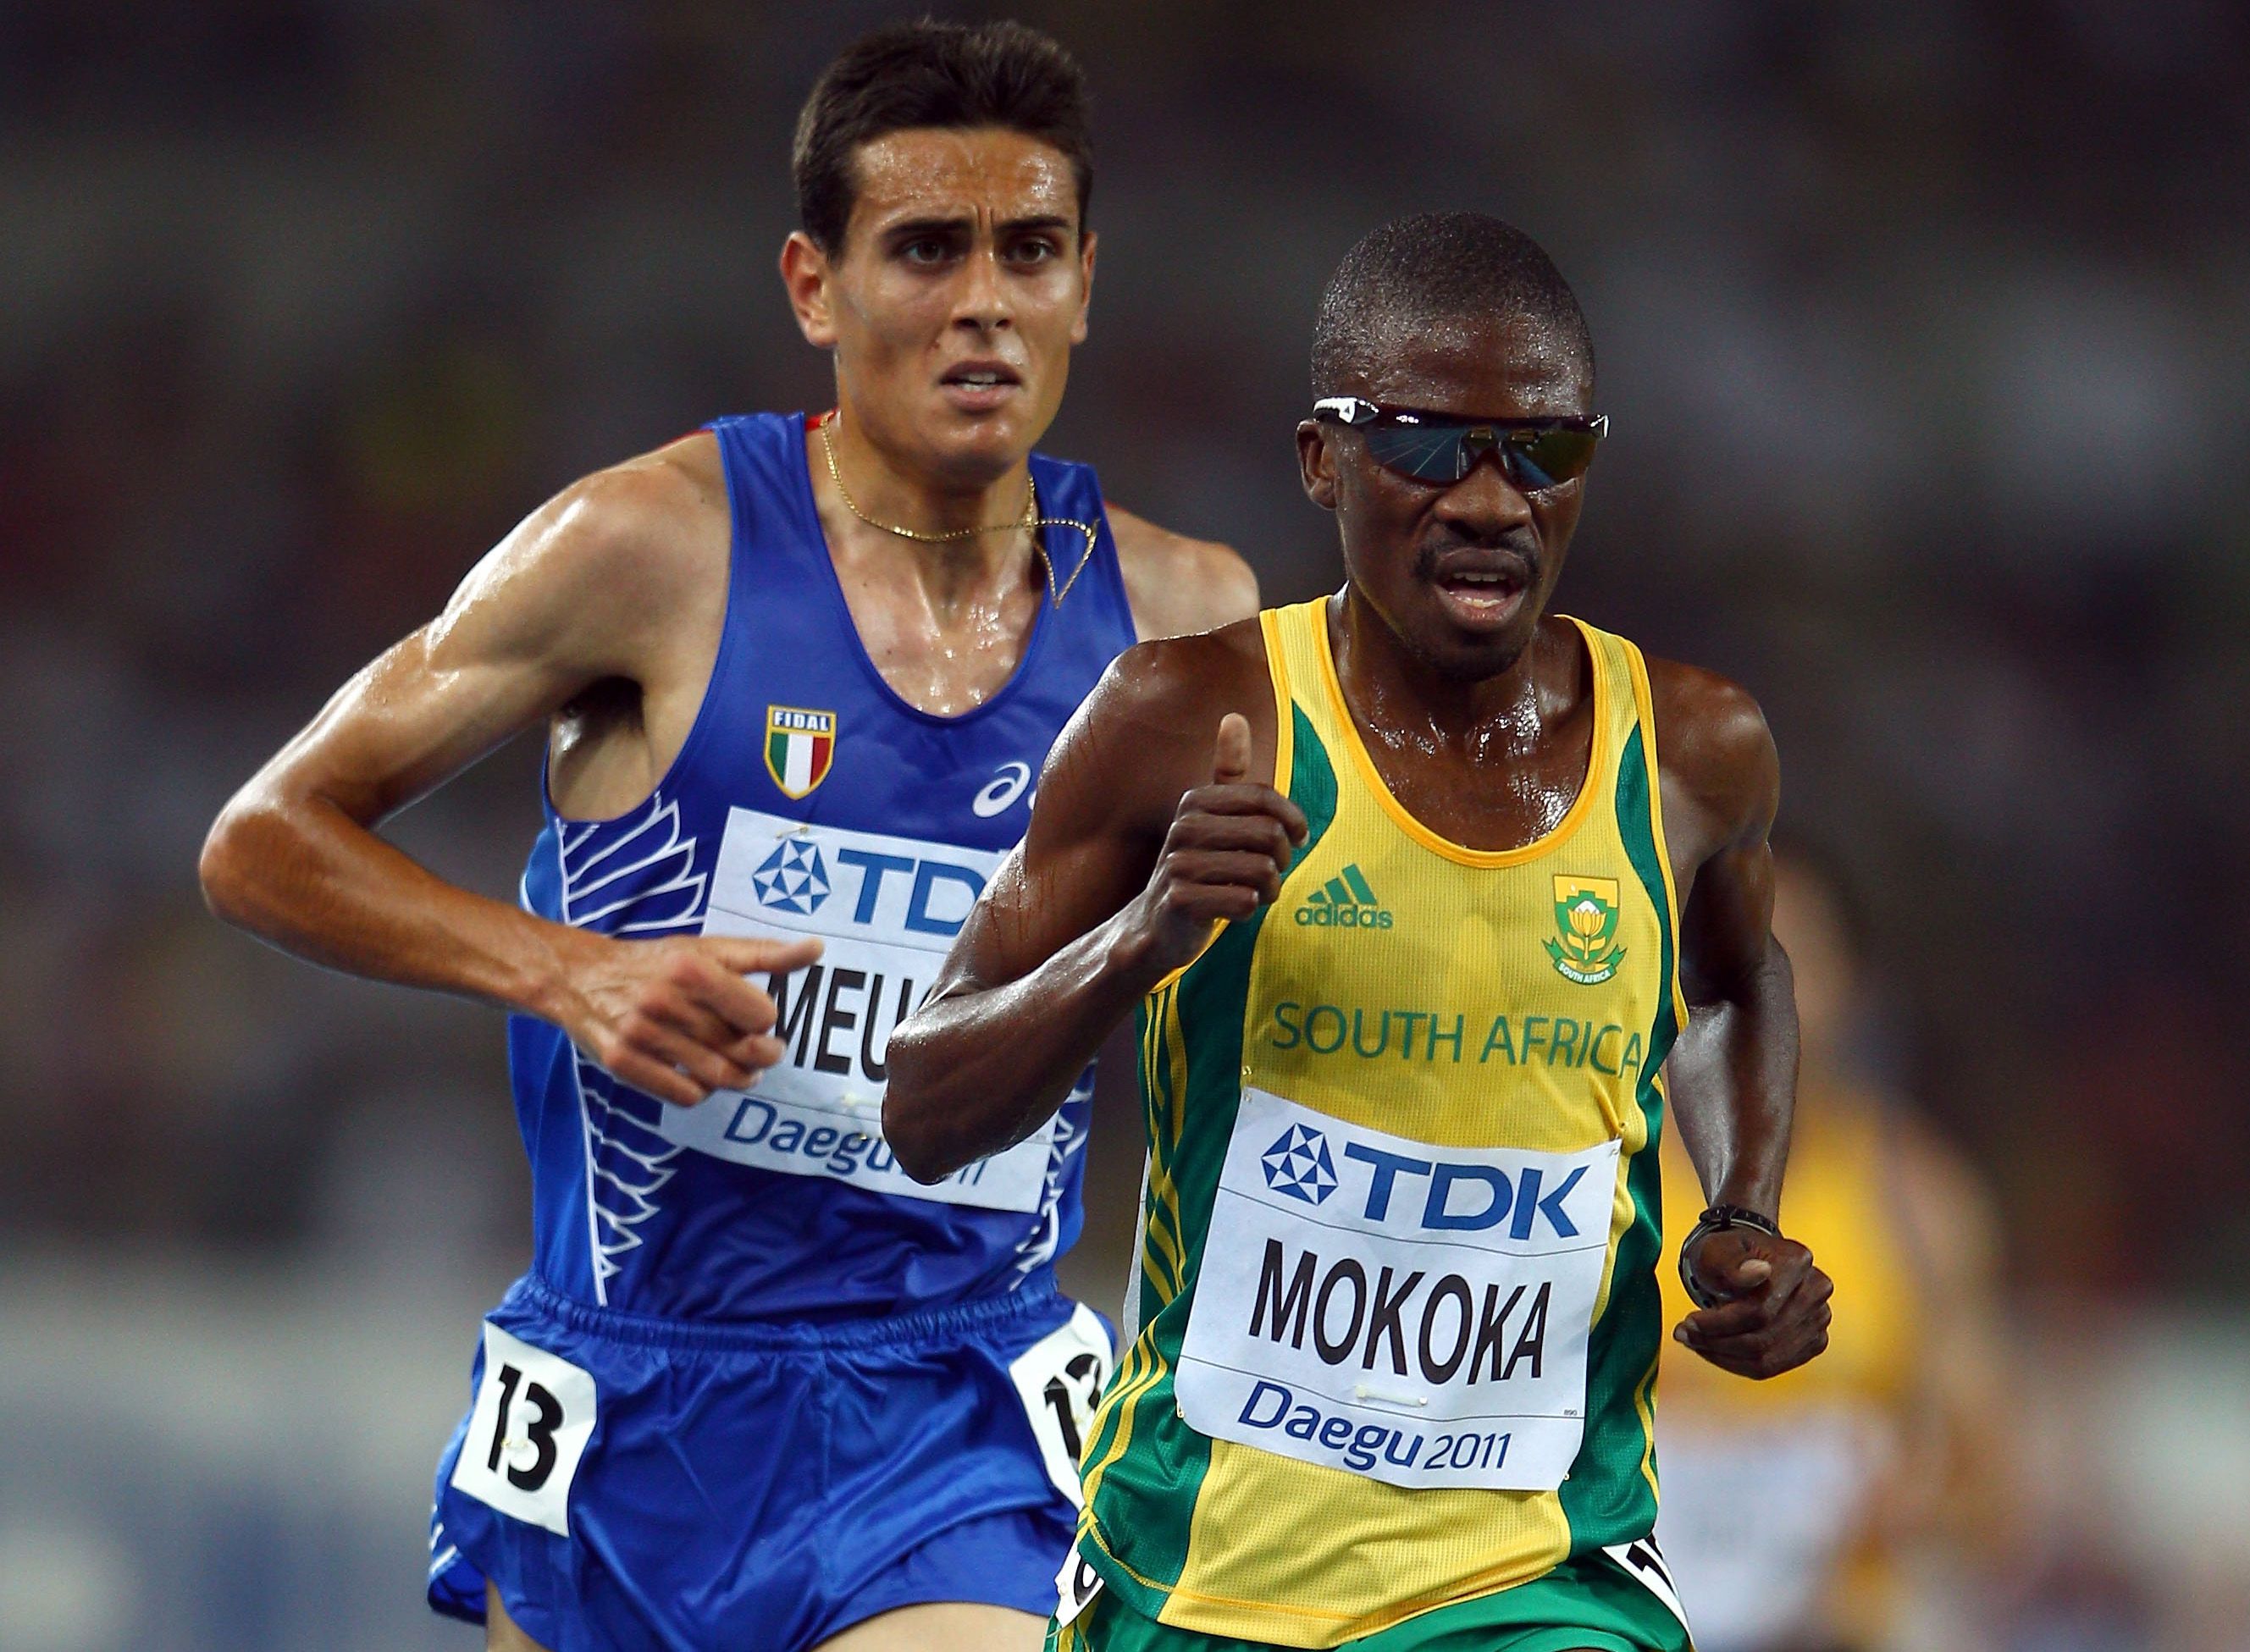 Stephen Mokoka in the 10,000m at the 2011 World Championships in Daegu